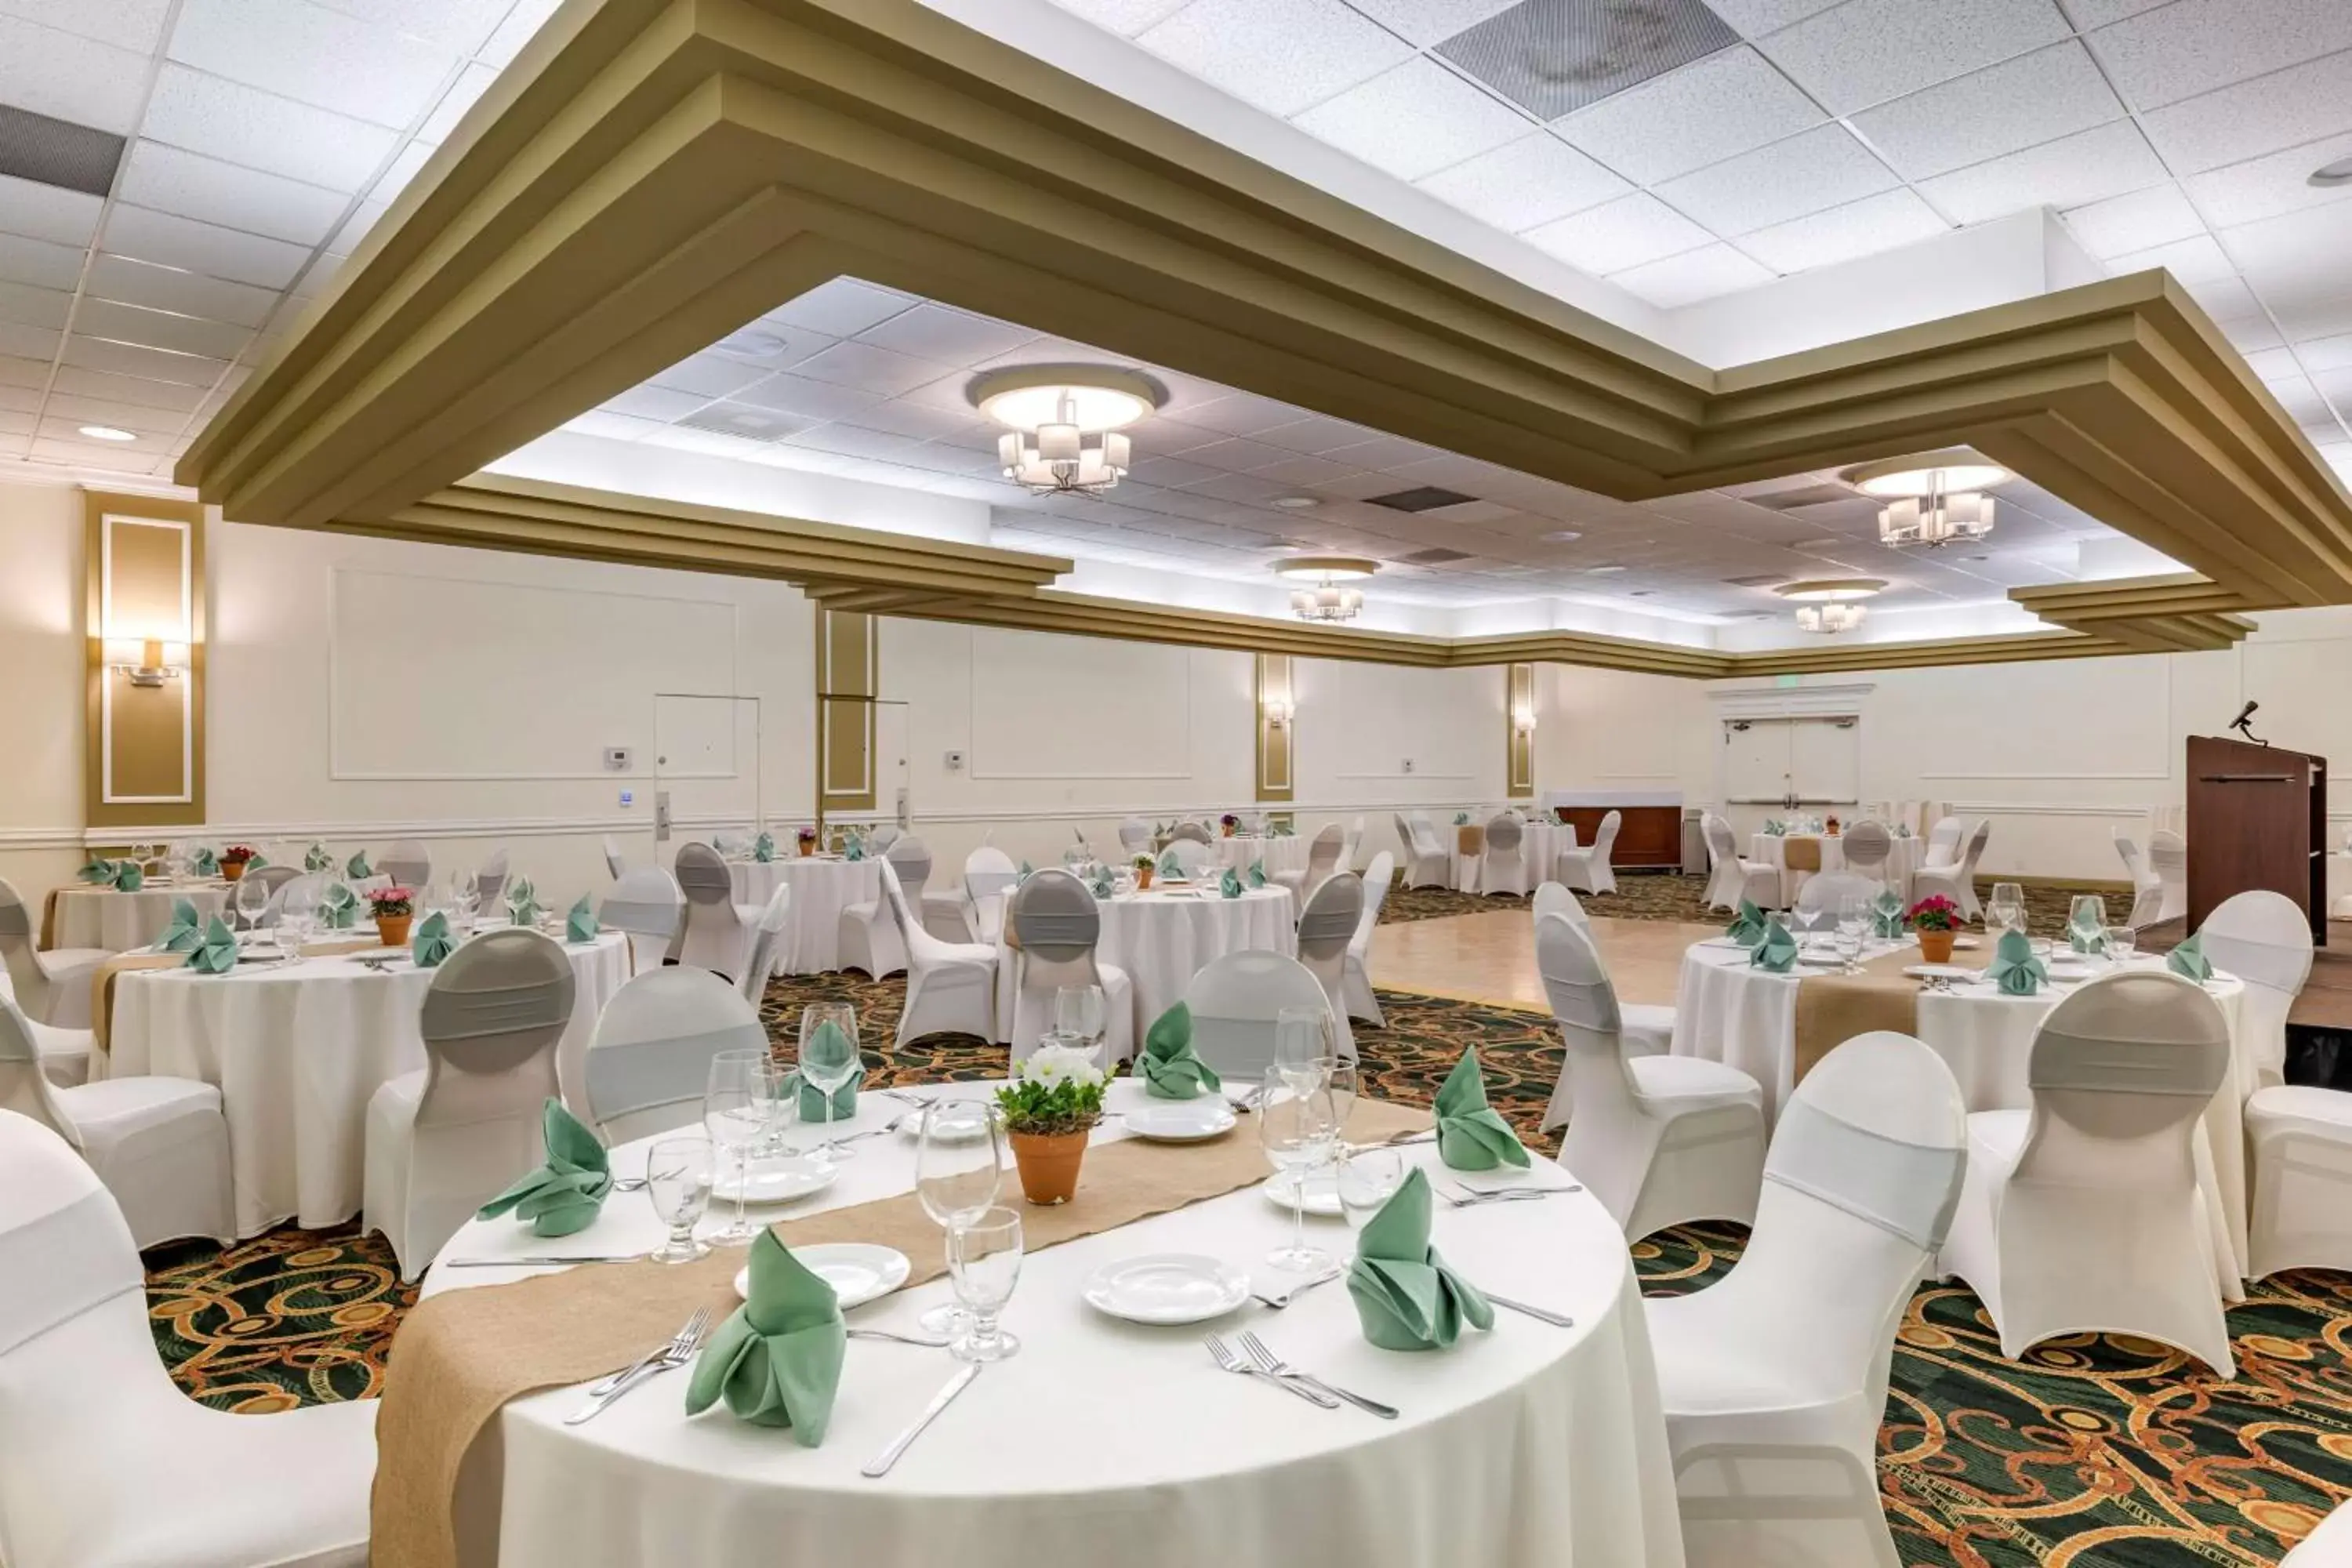 Banquet/Function facilities, Banquet Facilities in Best Western Plus Thousand Oaks Inn